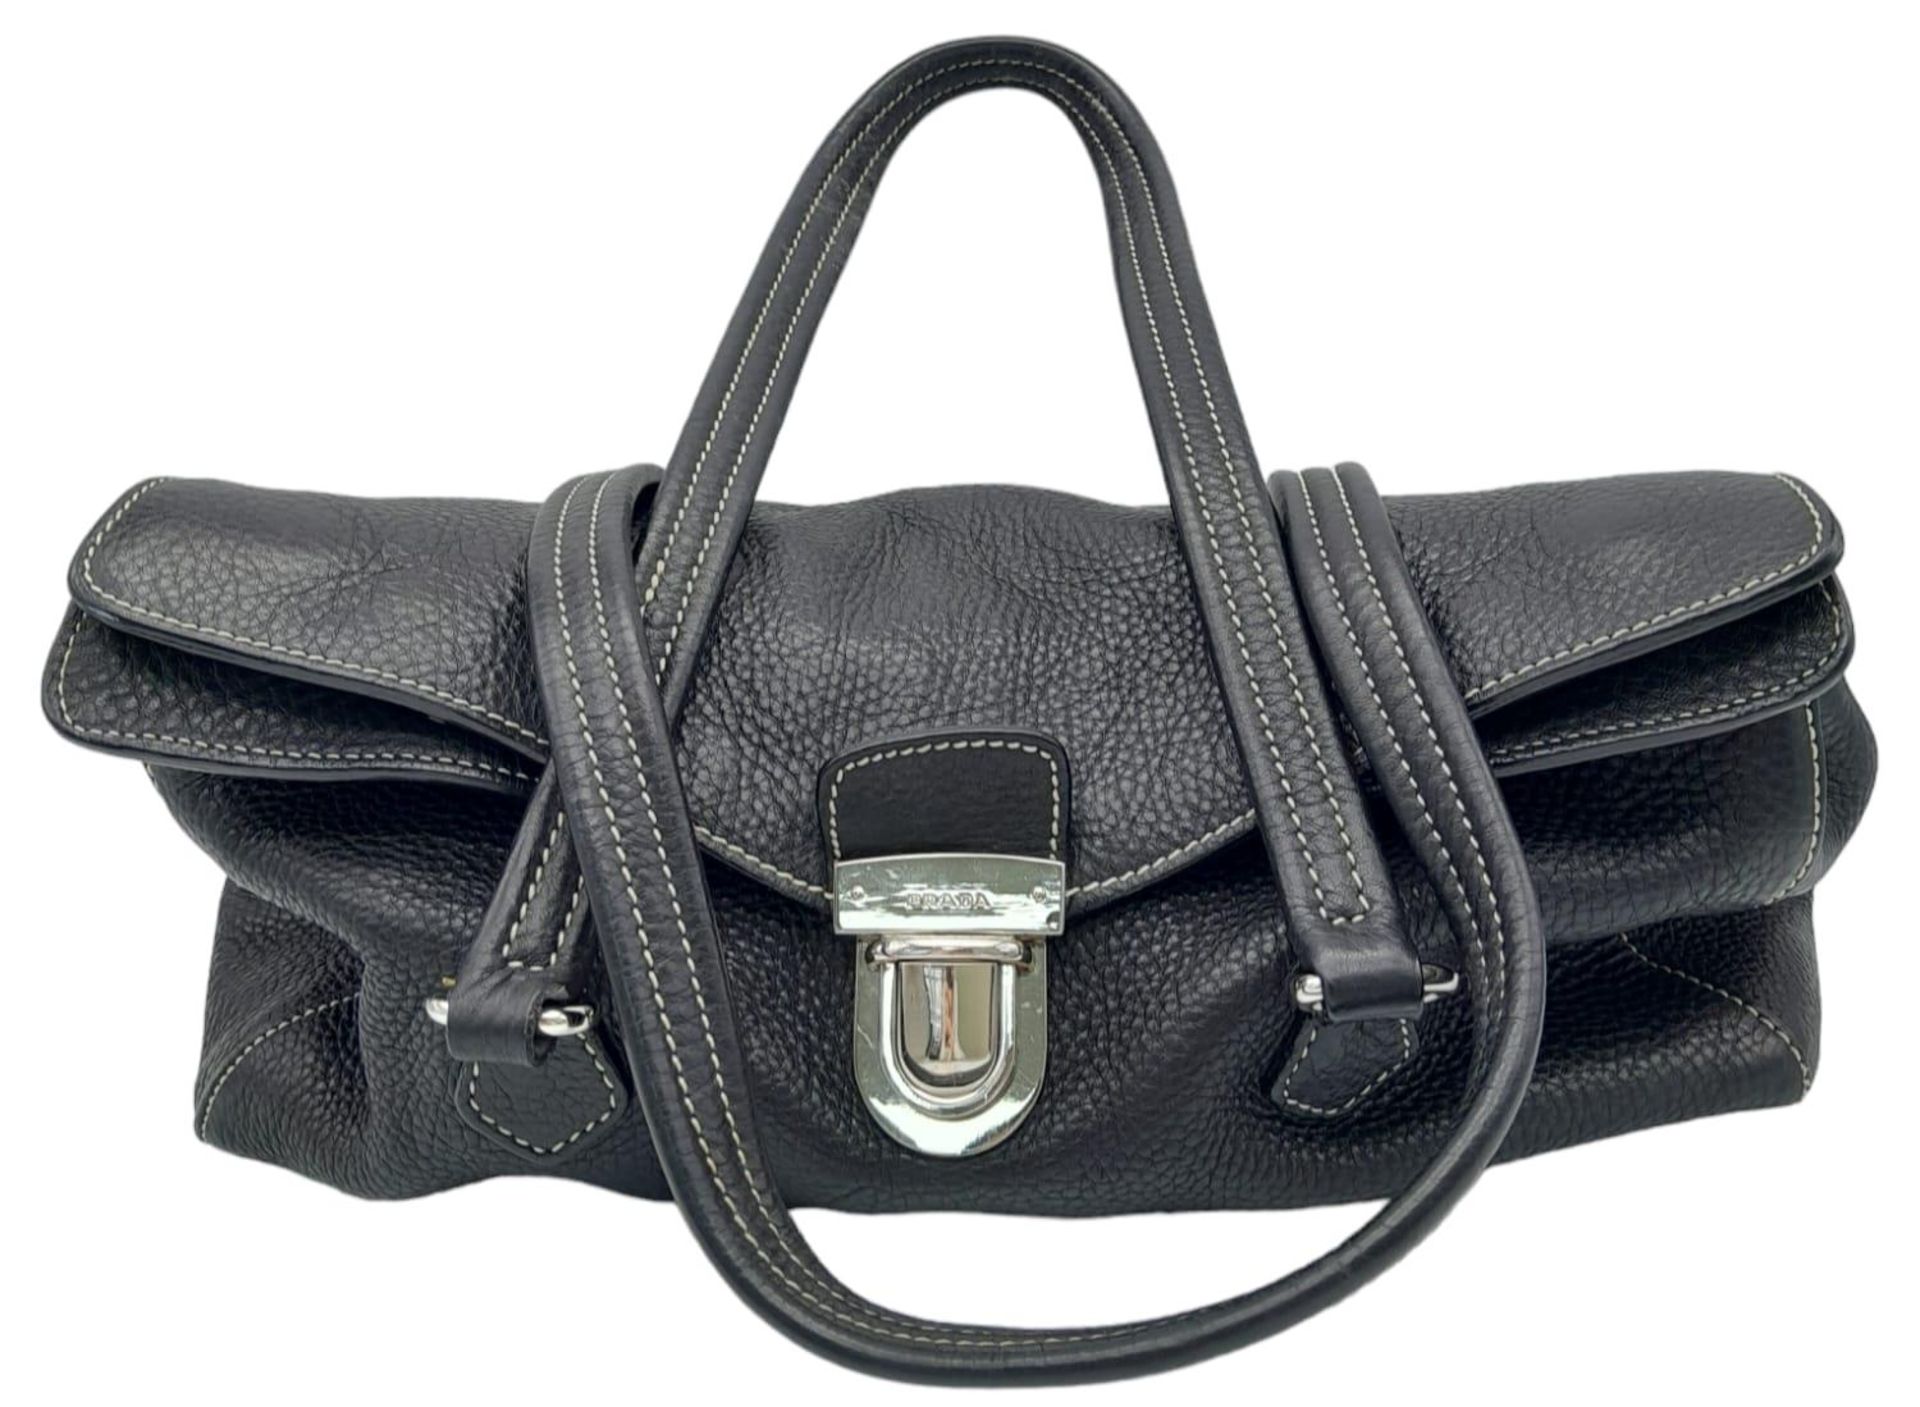 A Prada Black Vitello Shoulder Bag. Leather exterior with silver-toned hardware, two straps, push